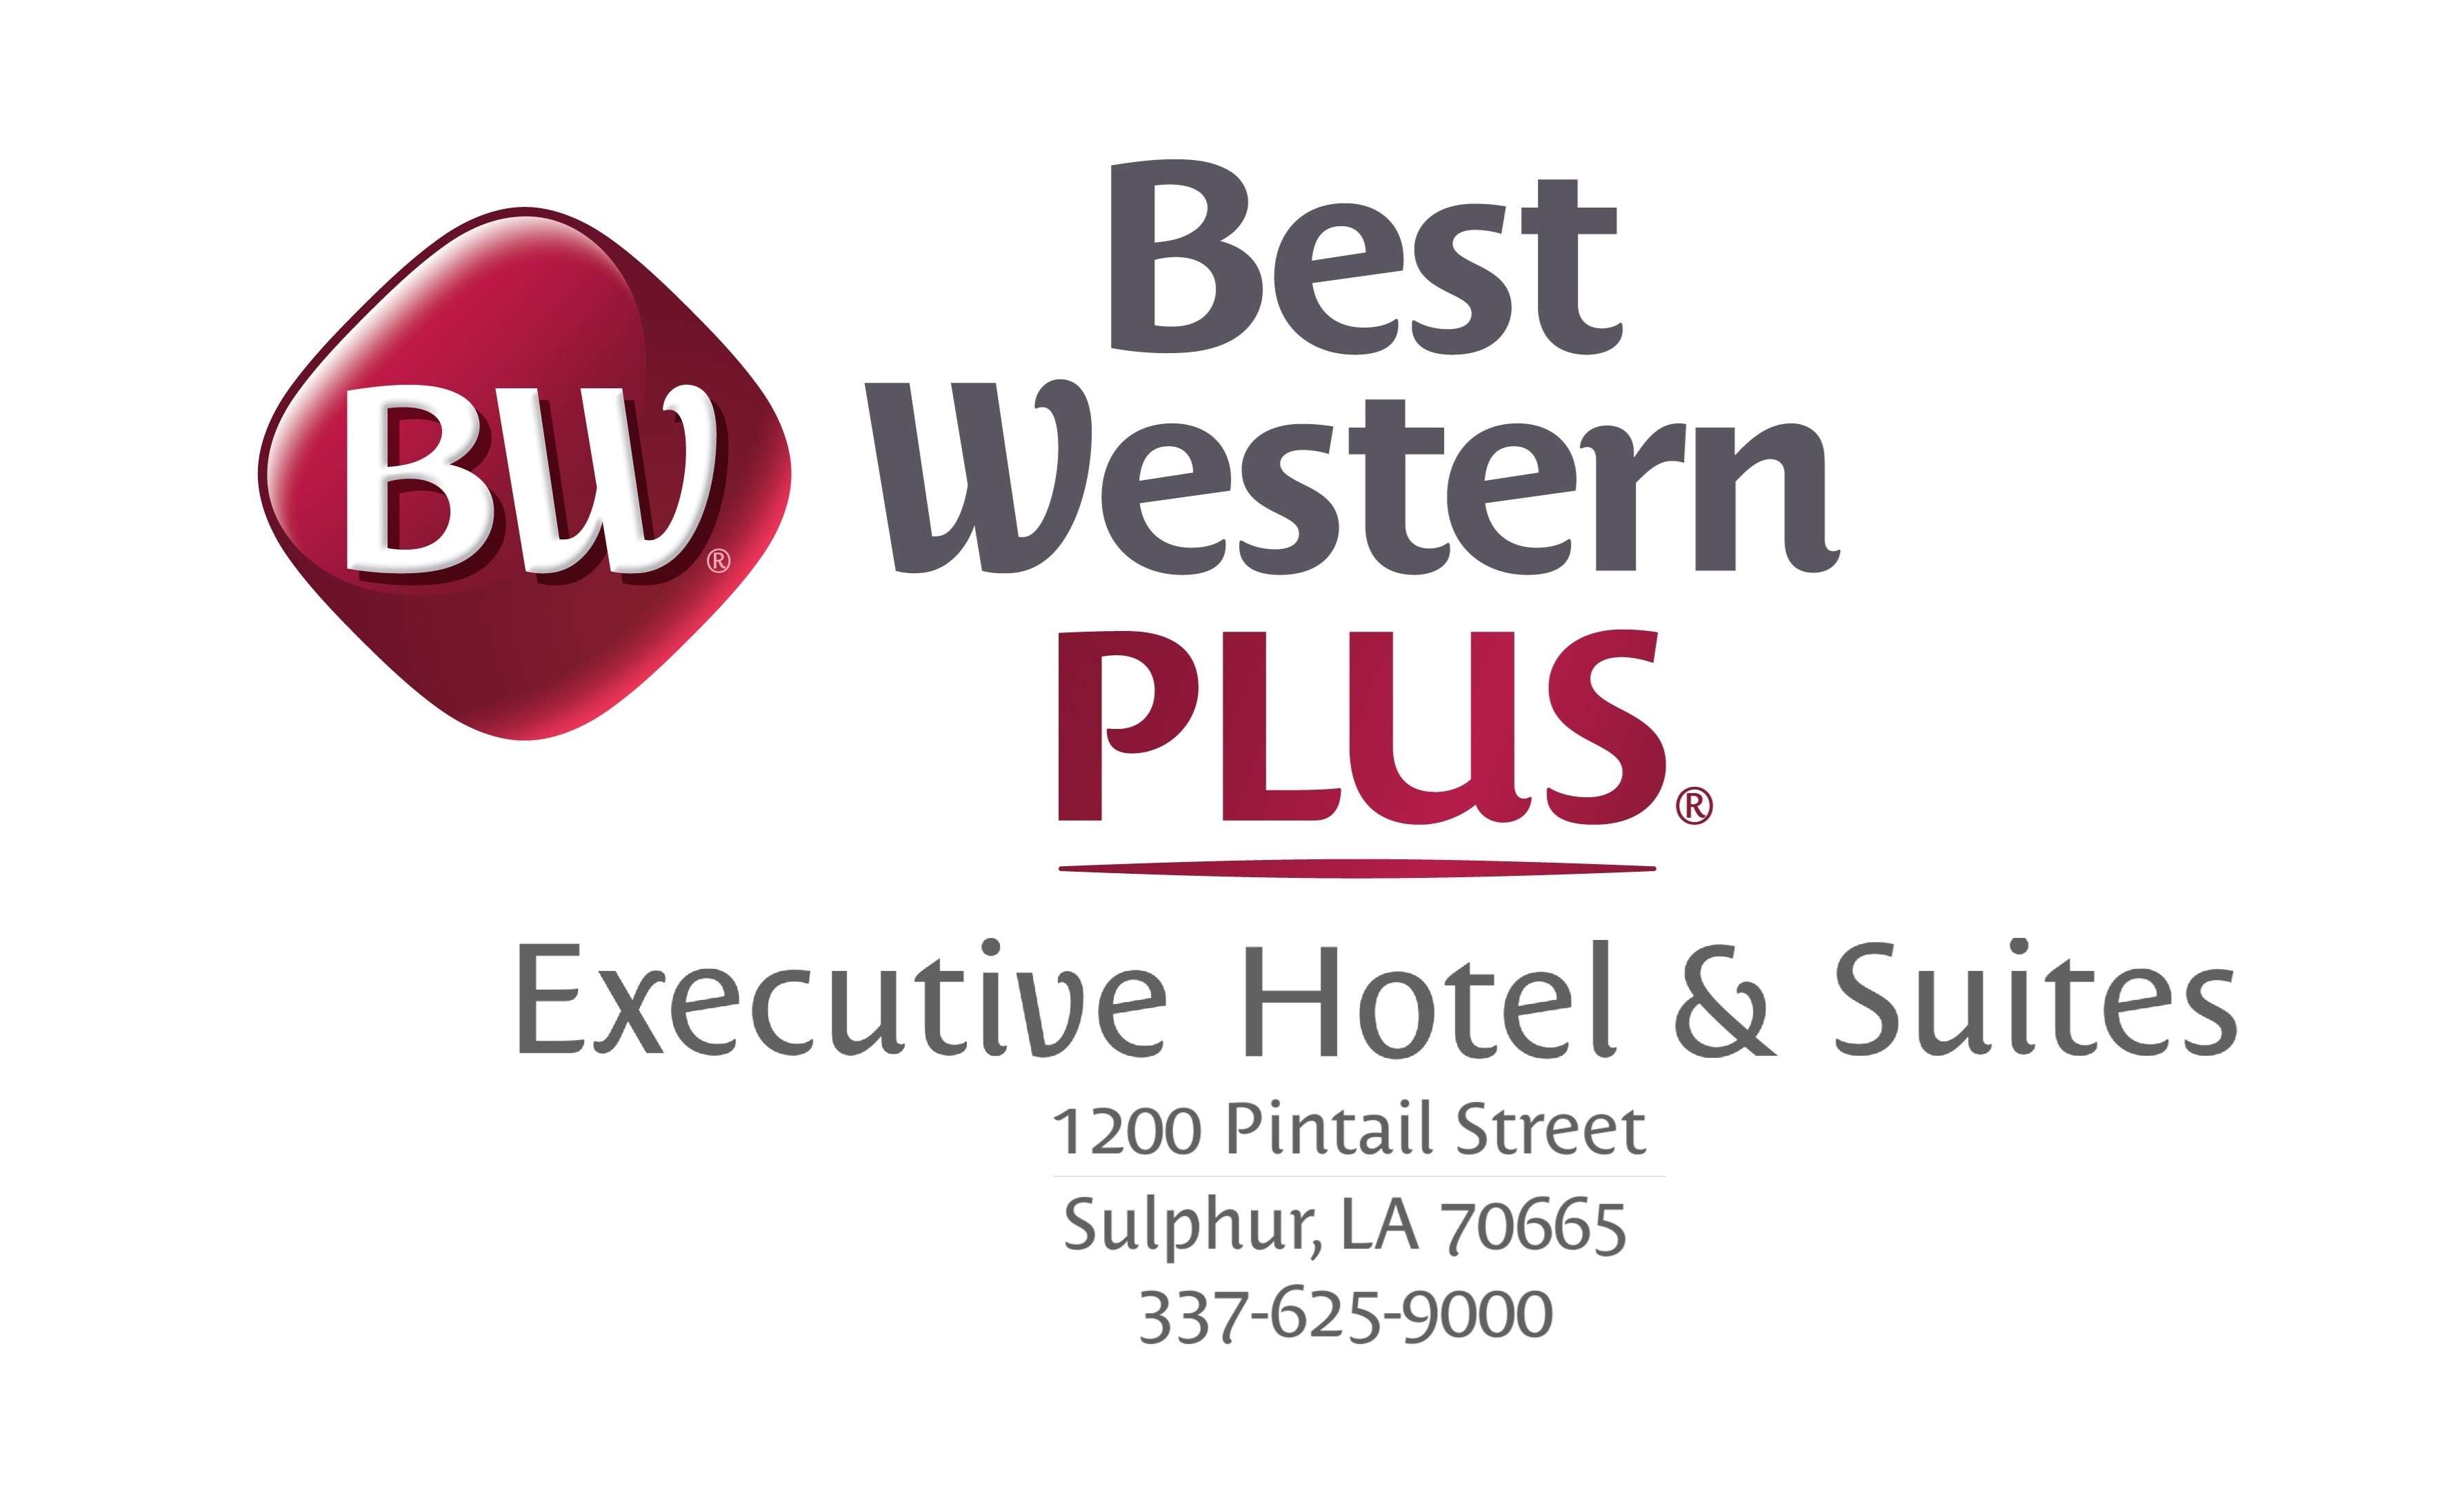 Best Western Plus Executive Hotel & Suites Photo